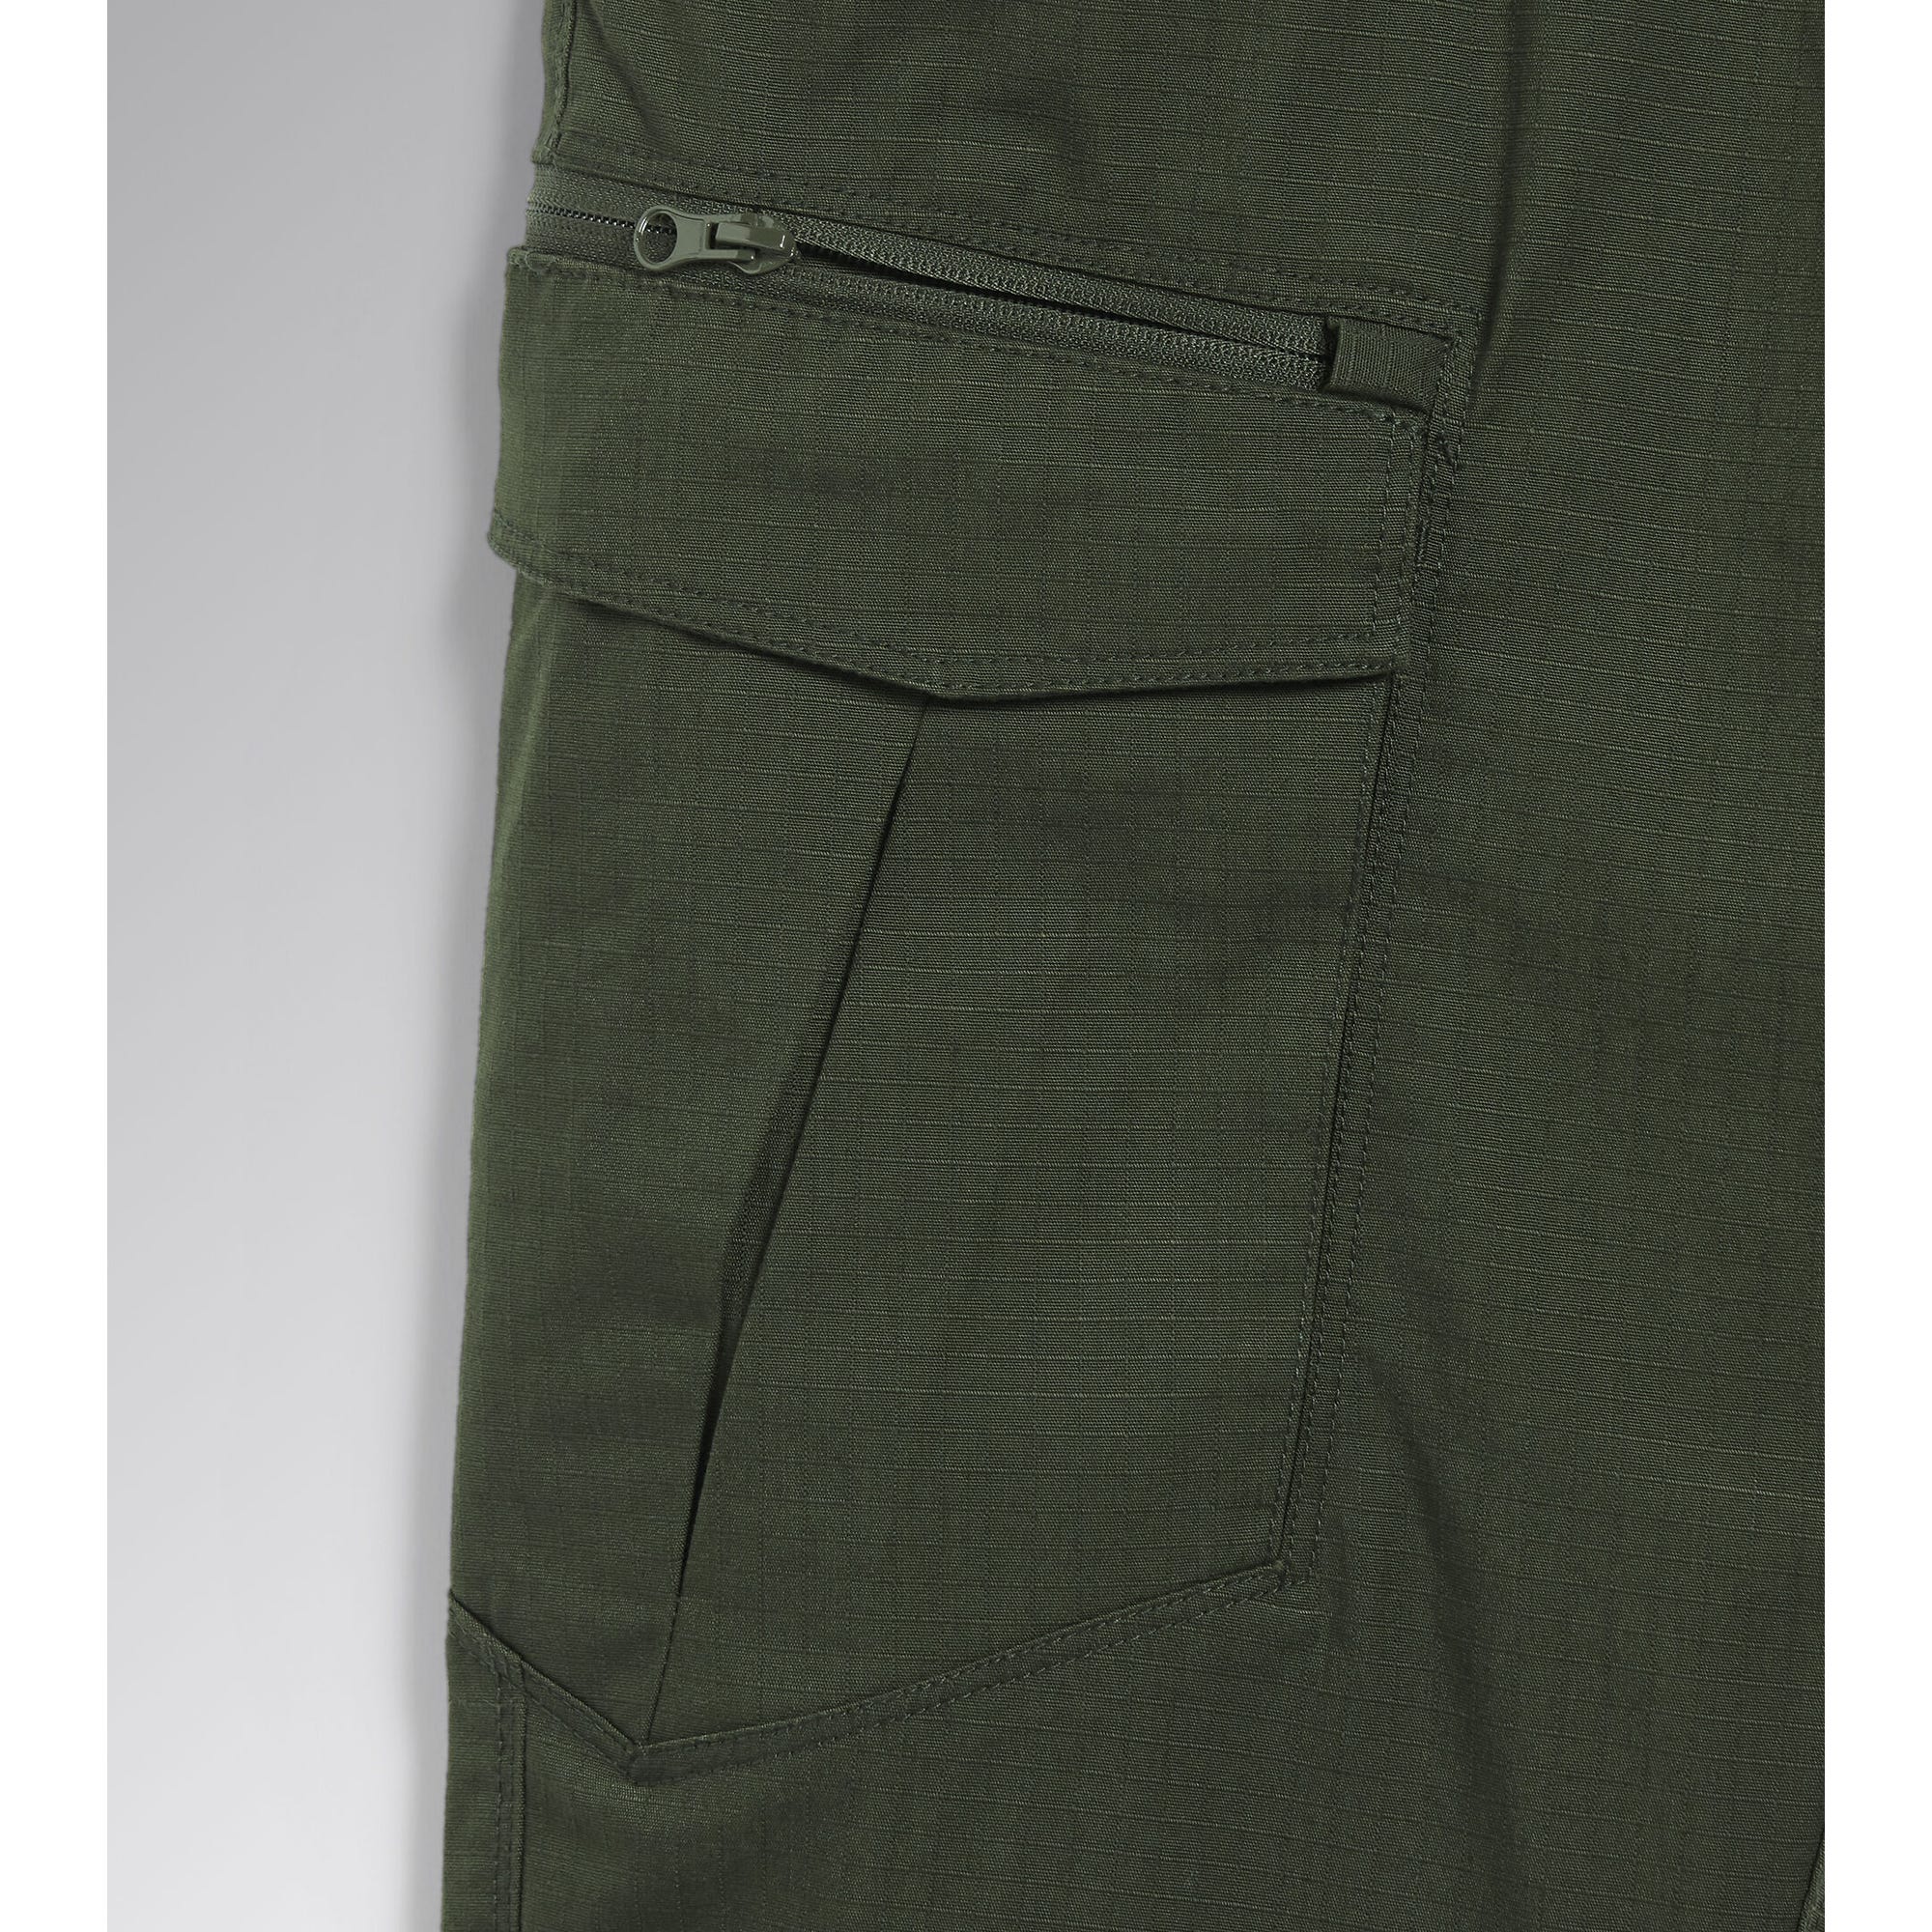 Pantalon de travail DIADORA CROSS CARGO Vert / Forêt S 4